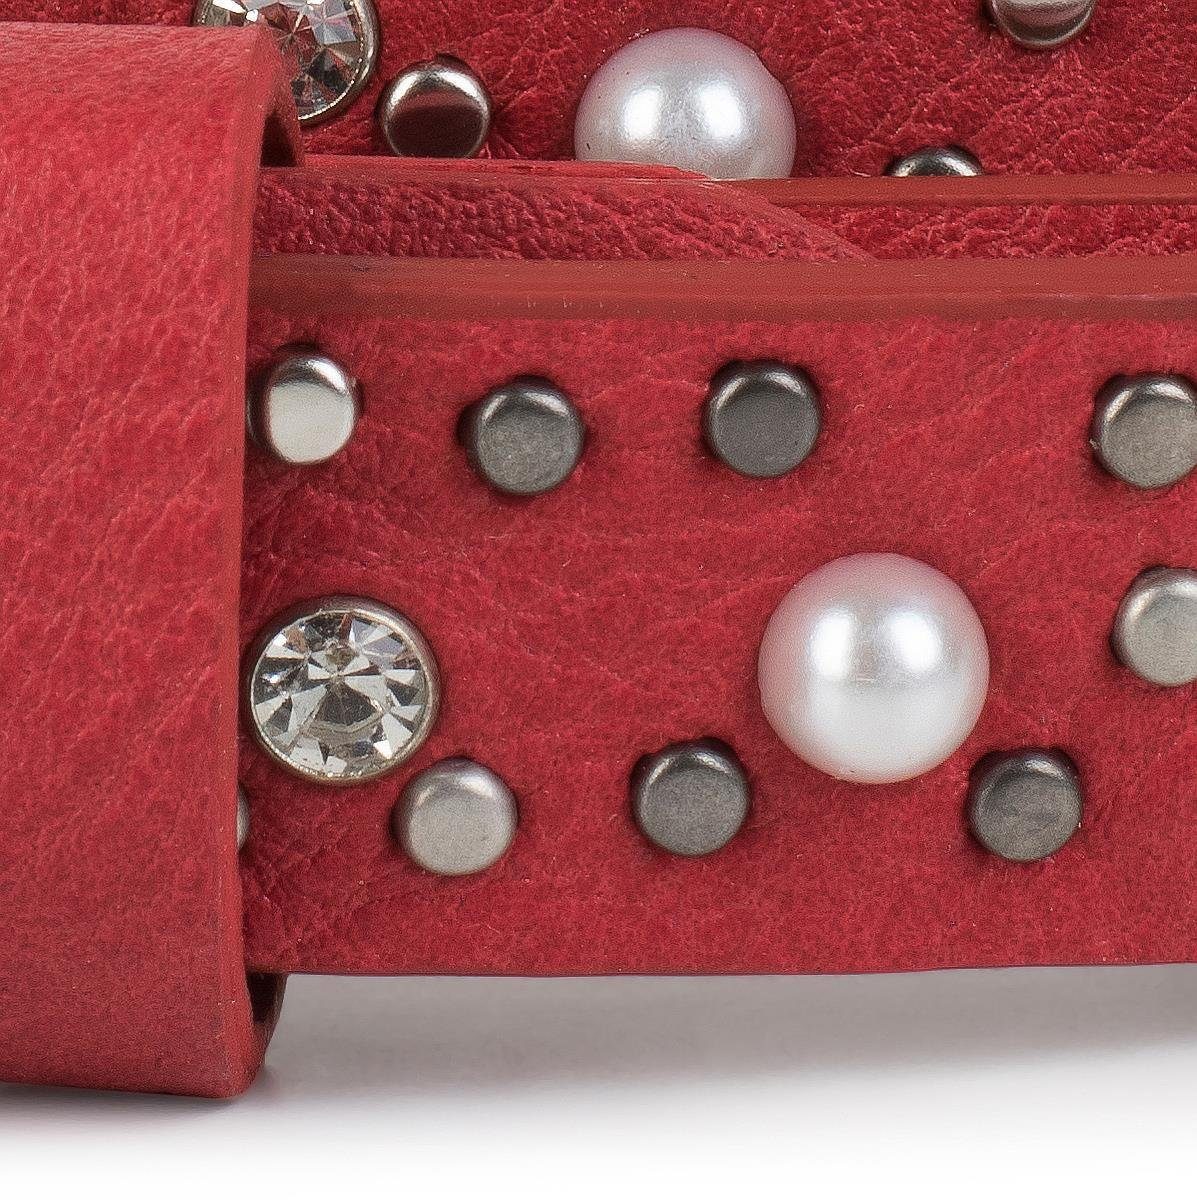 Nietengürtel Synthetikgürtel styleBREAKER Perlen mit und Bordeaux-Rot Strass Schmaler